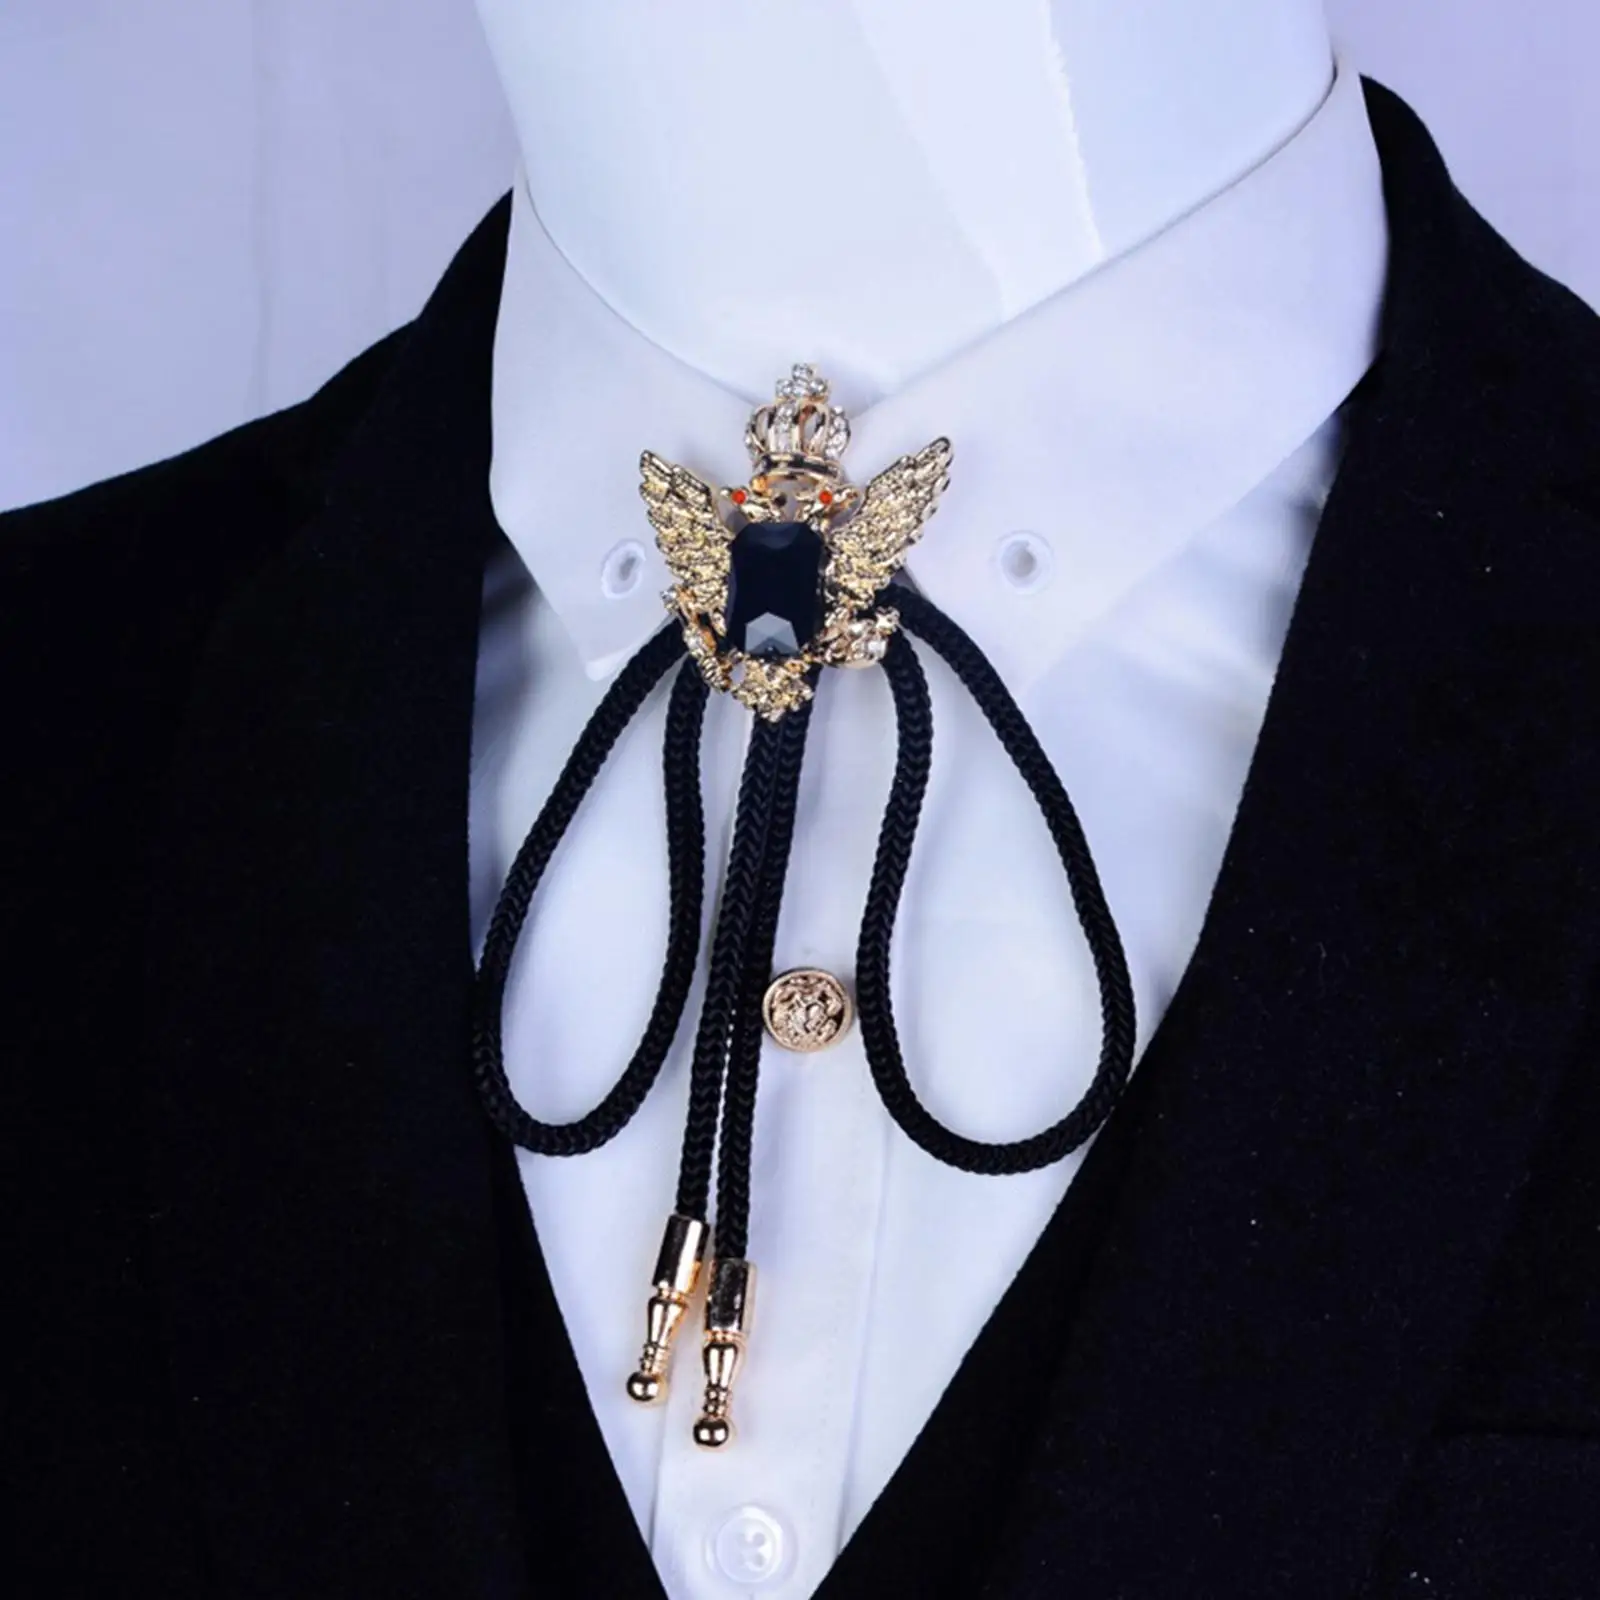 Double Head Eagle Rhinestone Bolo Tie, for Women Men Special Apparel Accessory , Slide Pendant to Adjust Necktie Length Necktie